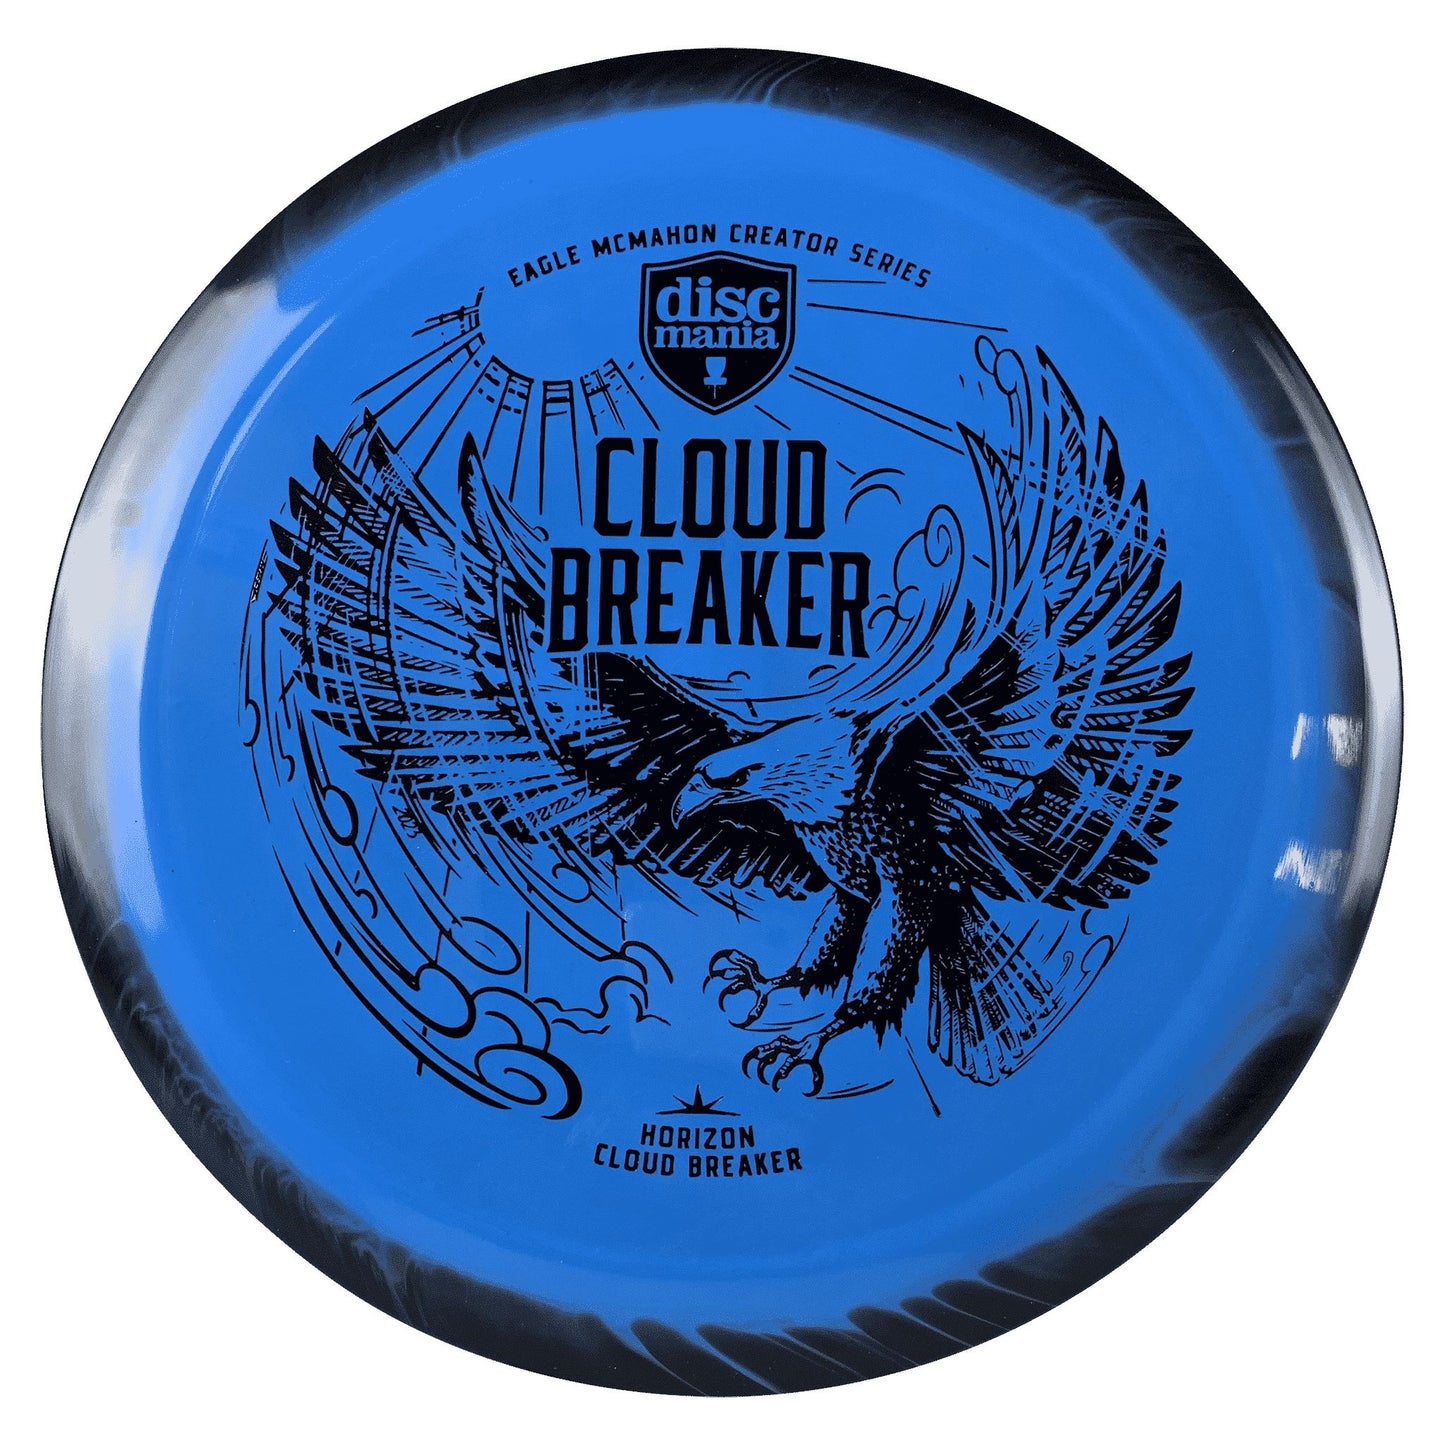 Horizon Cloud Breaker - Creator Series Eagle McMahon Disc Discmania blue 173 